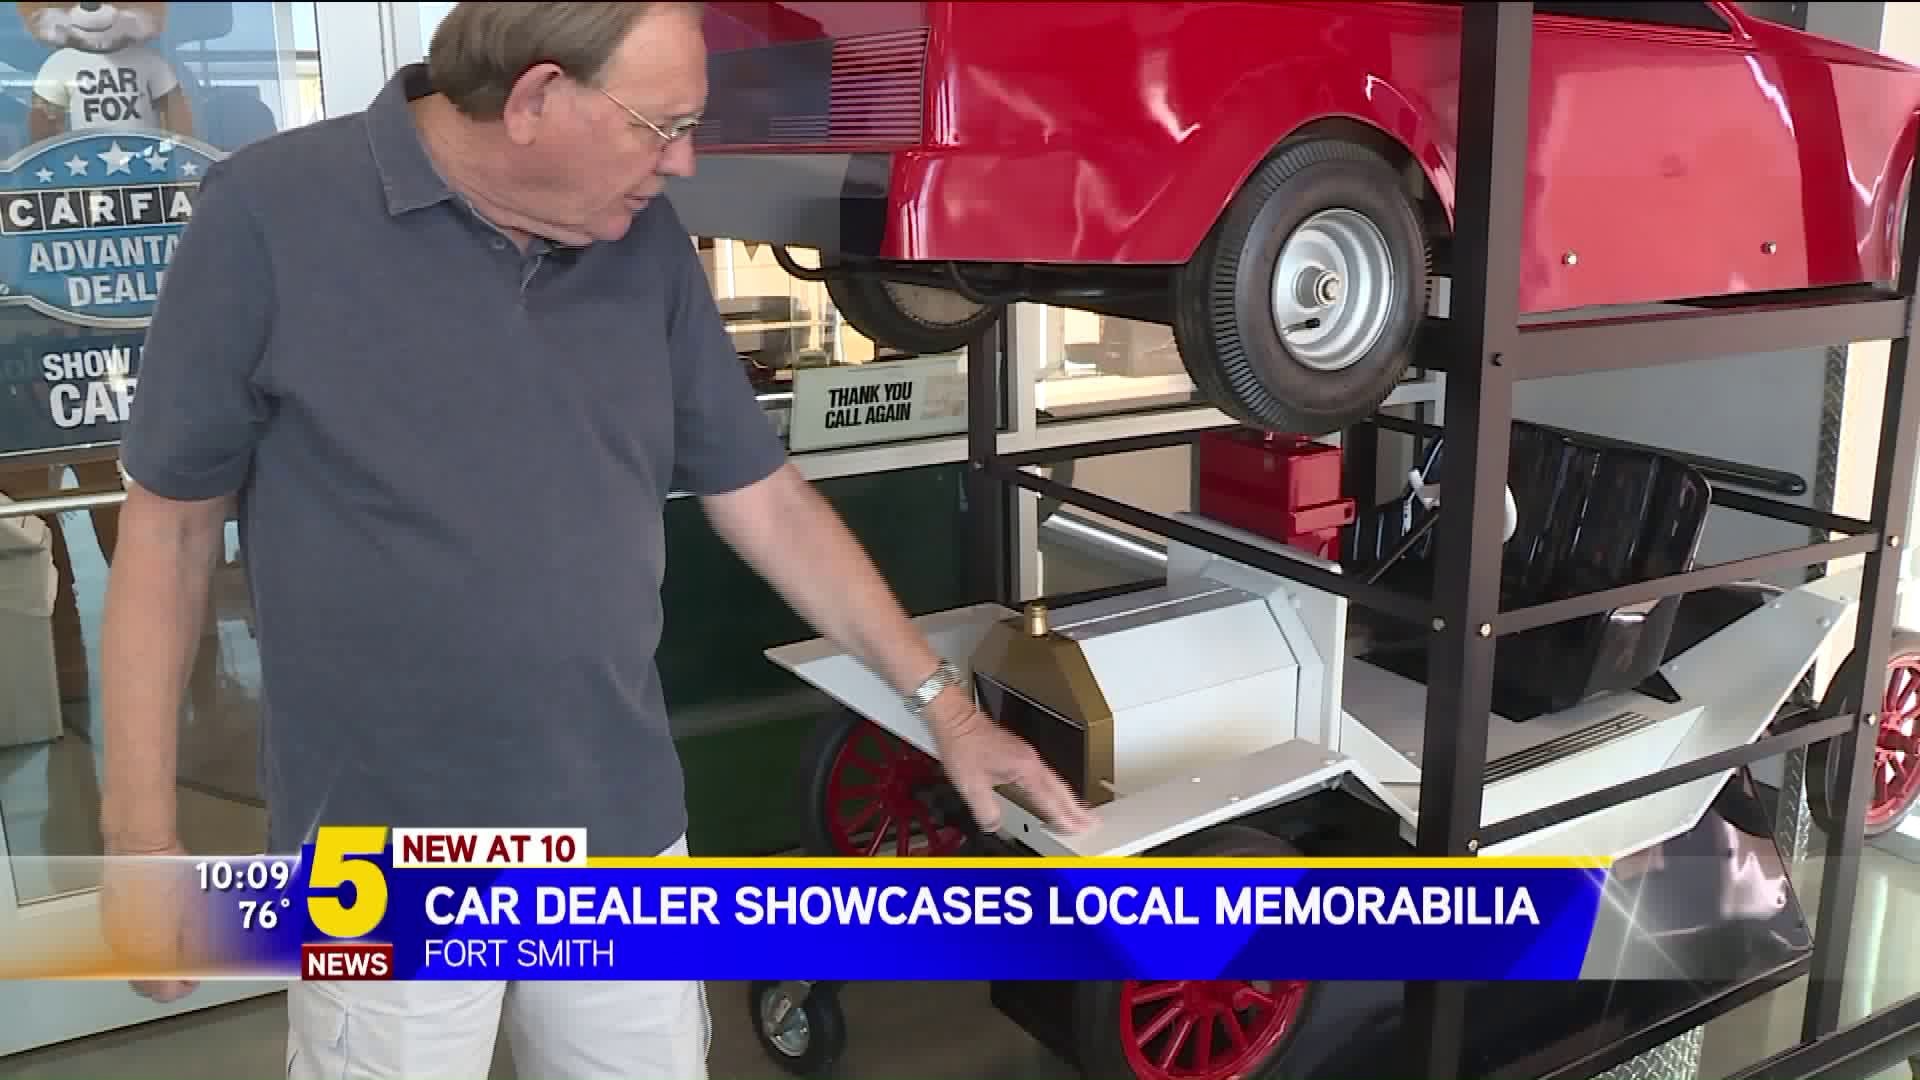 Car Dealer Showcases Memorabilia